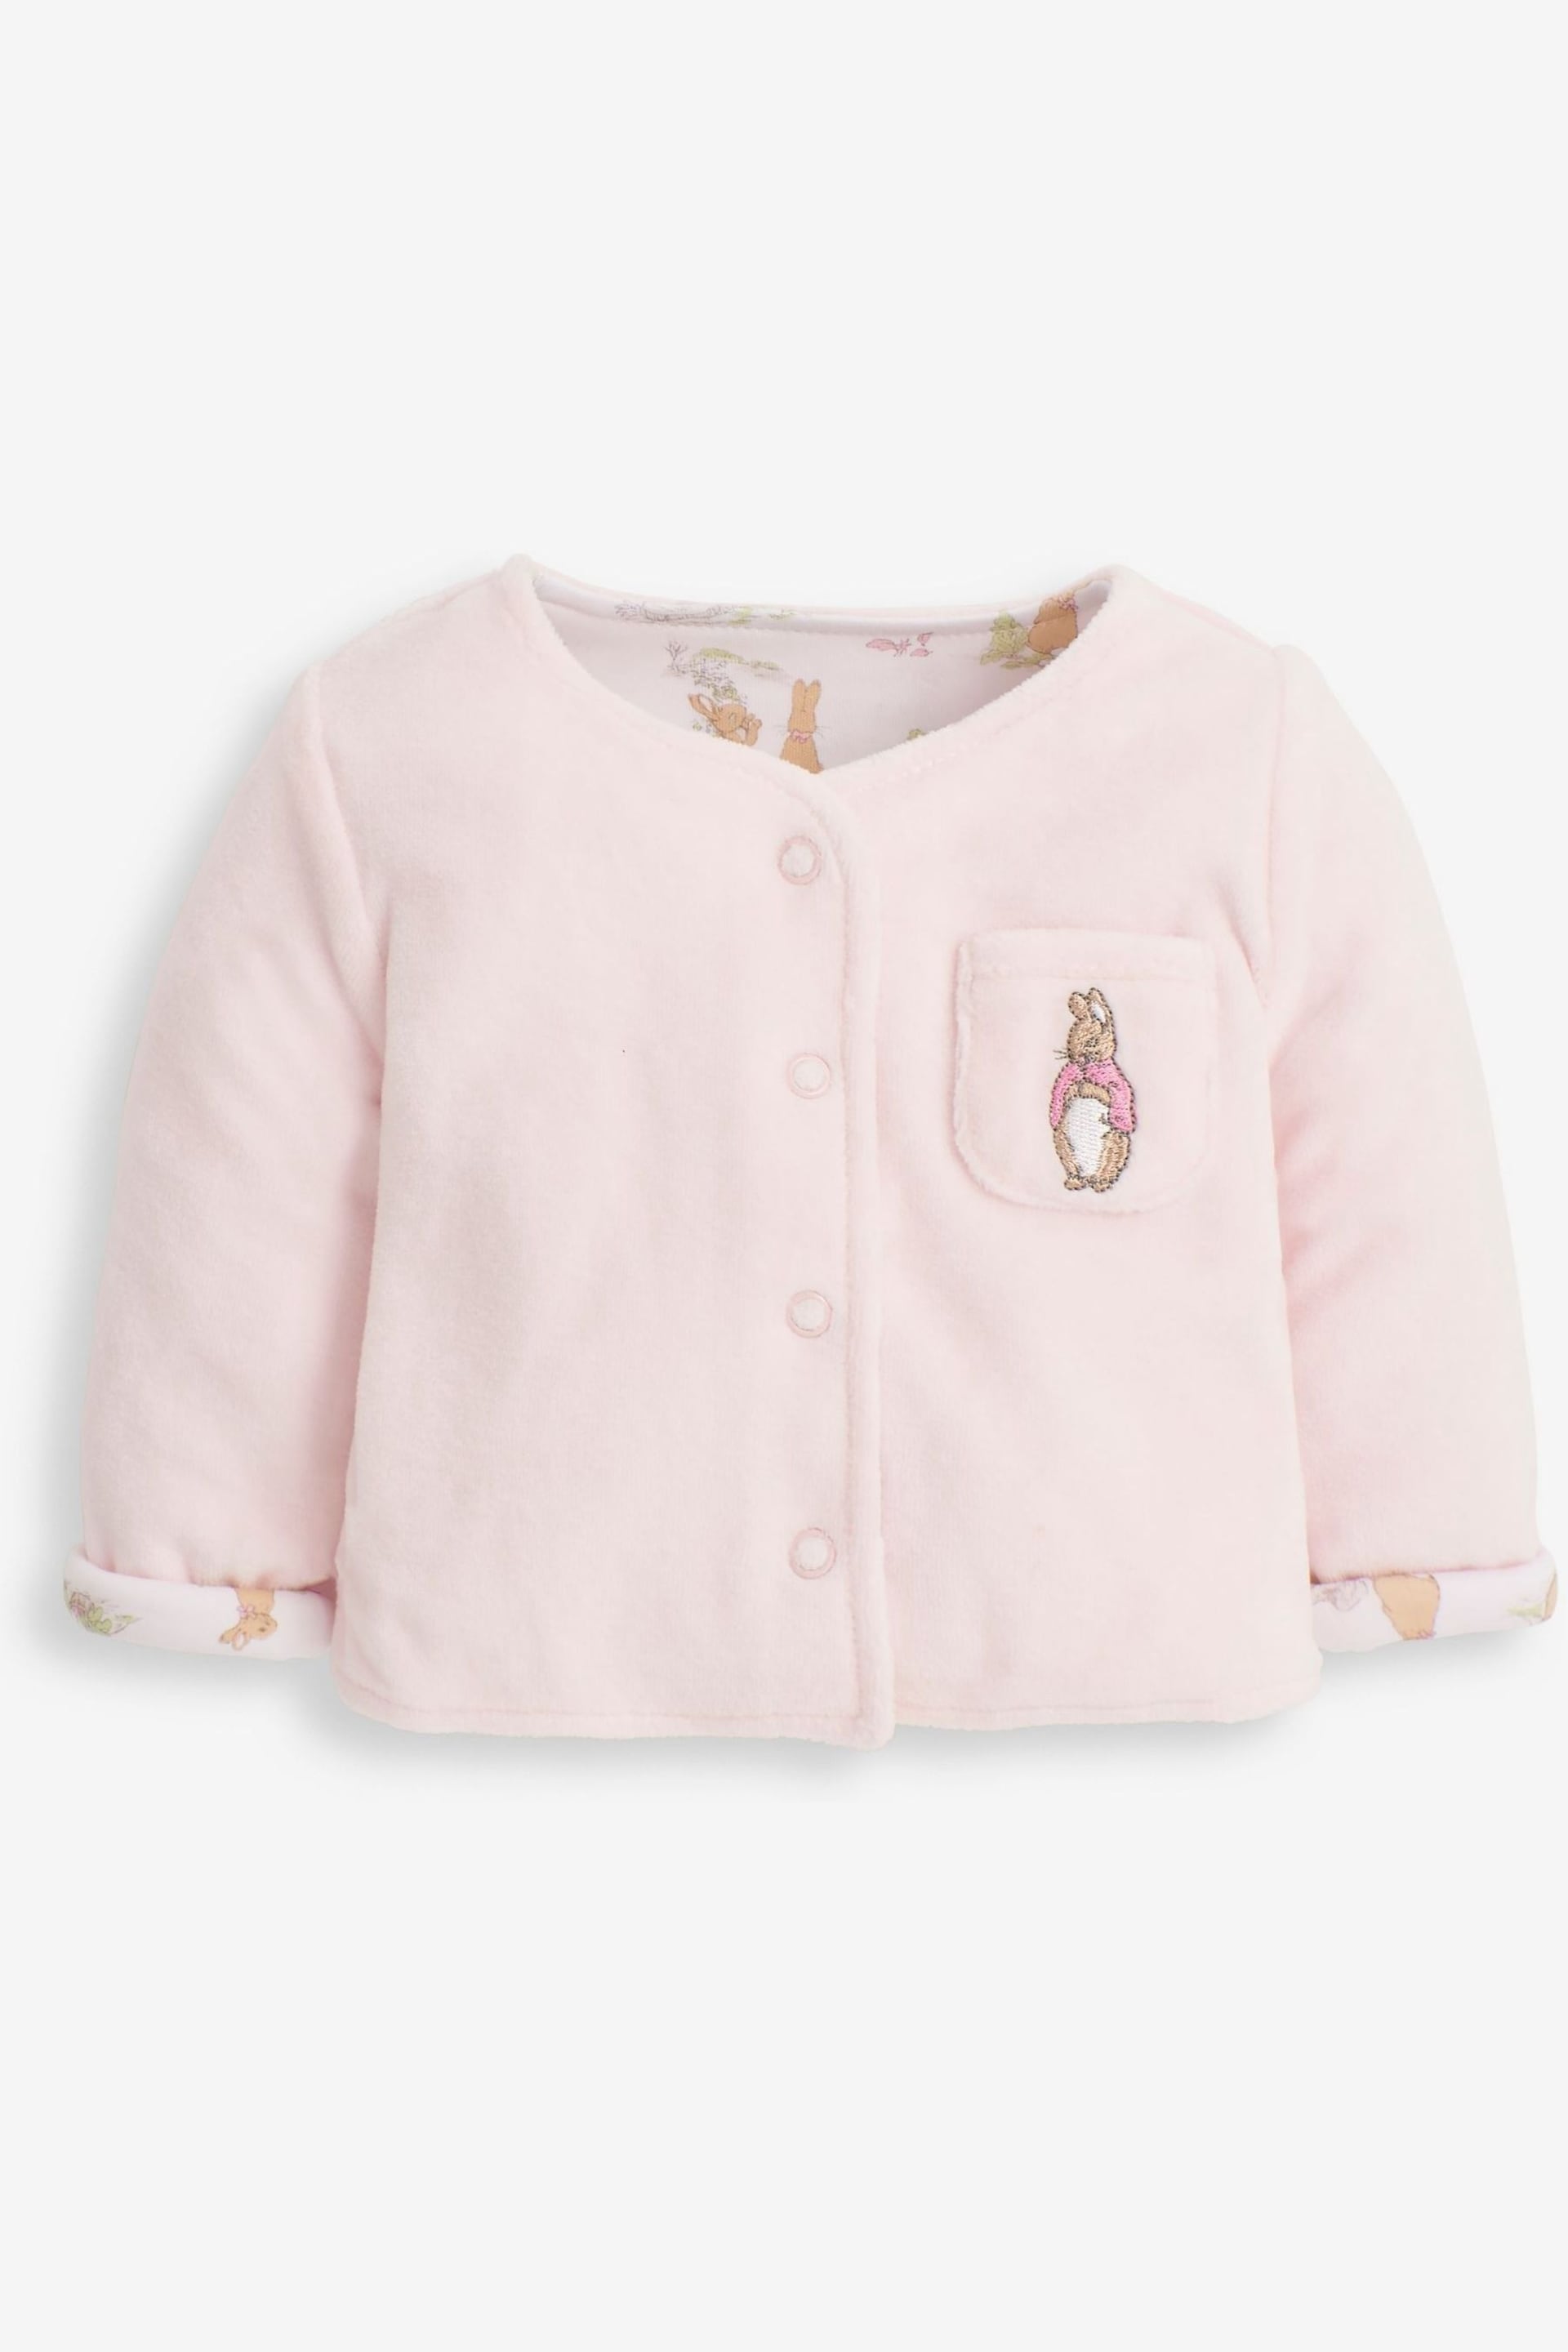 JoJo Maman Bébé Pink 3-Piece Flopsy Bunny Sleepsuit, Jacket & Hat Set - Image 6 of 9